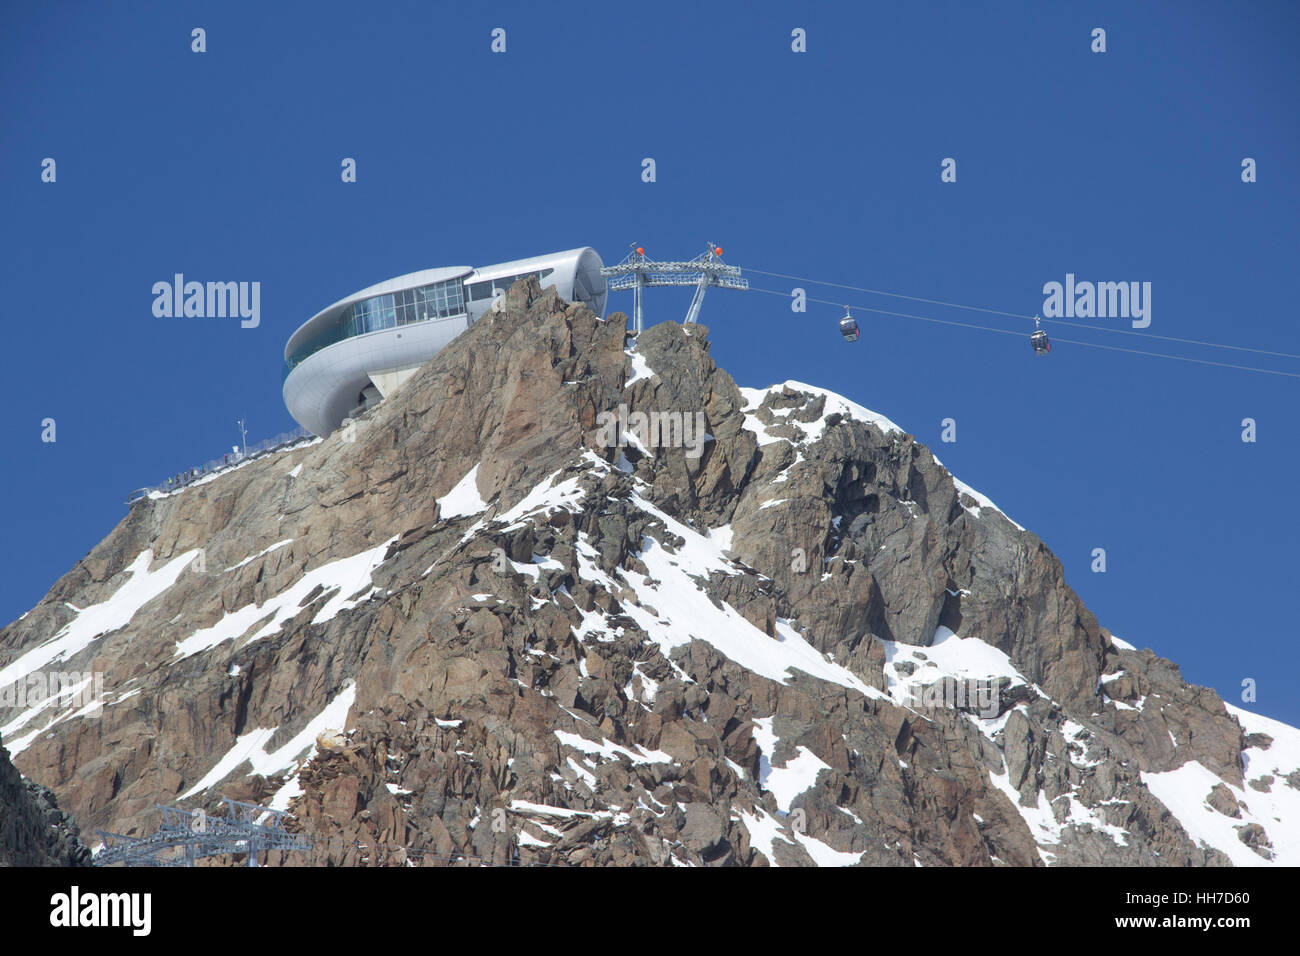 Wildspitzbahn, mountain station at ski resort Pitztal, Mittelberg, Tyrol, Austria Stock Photo